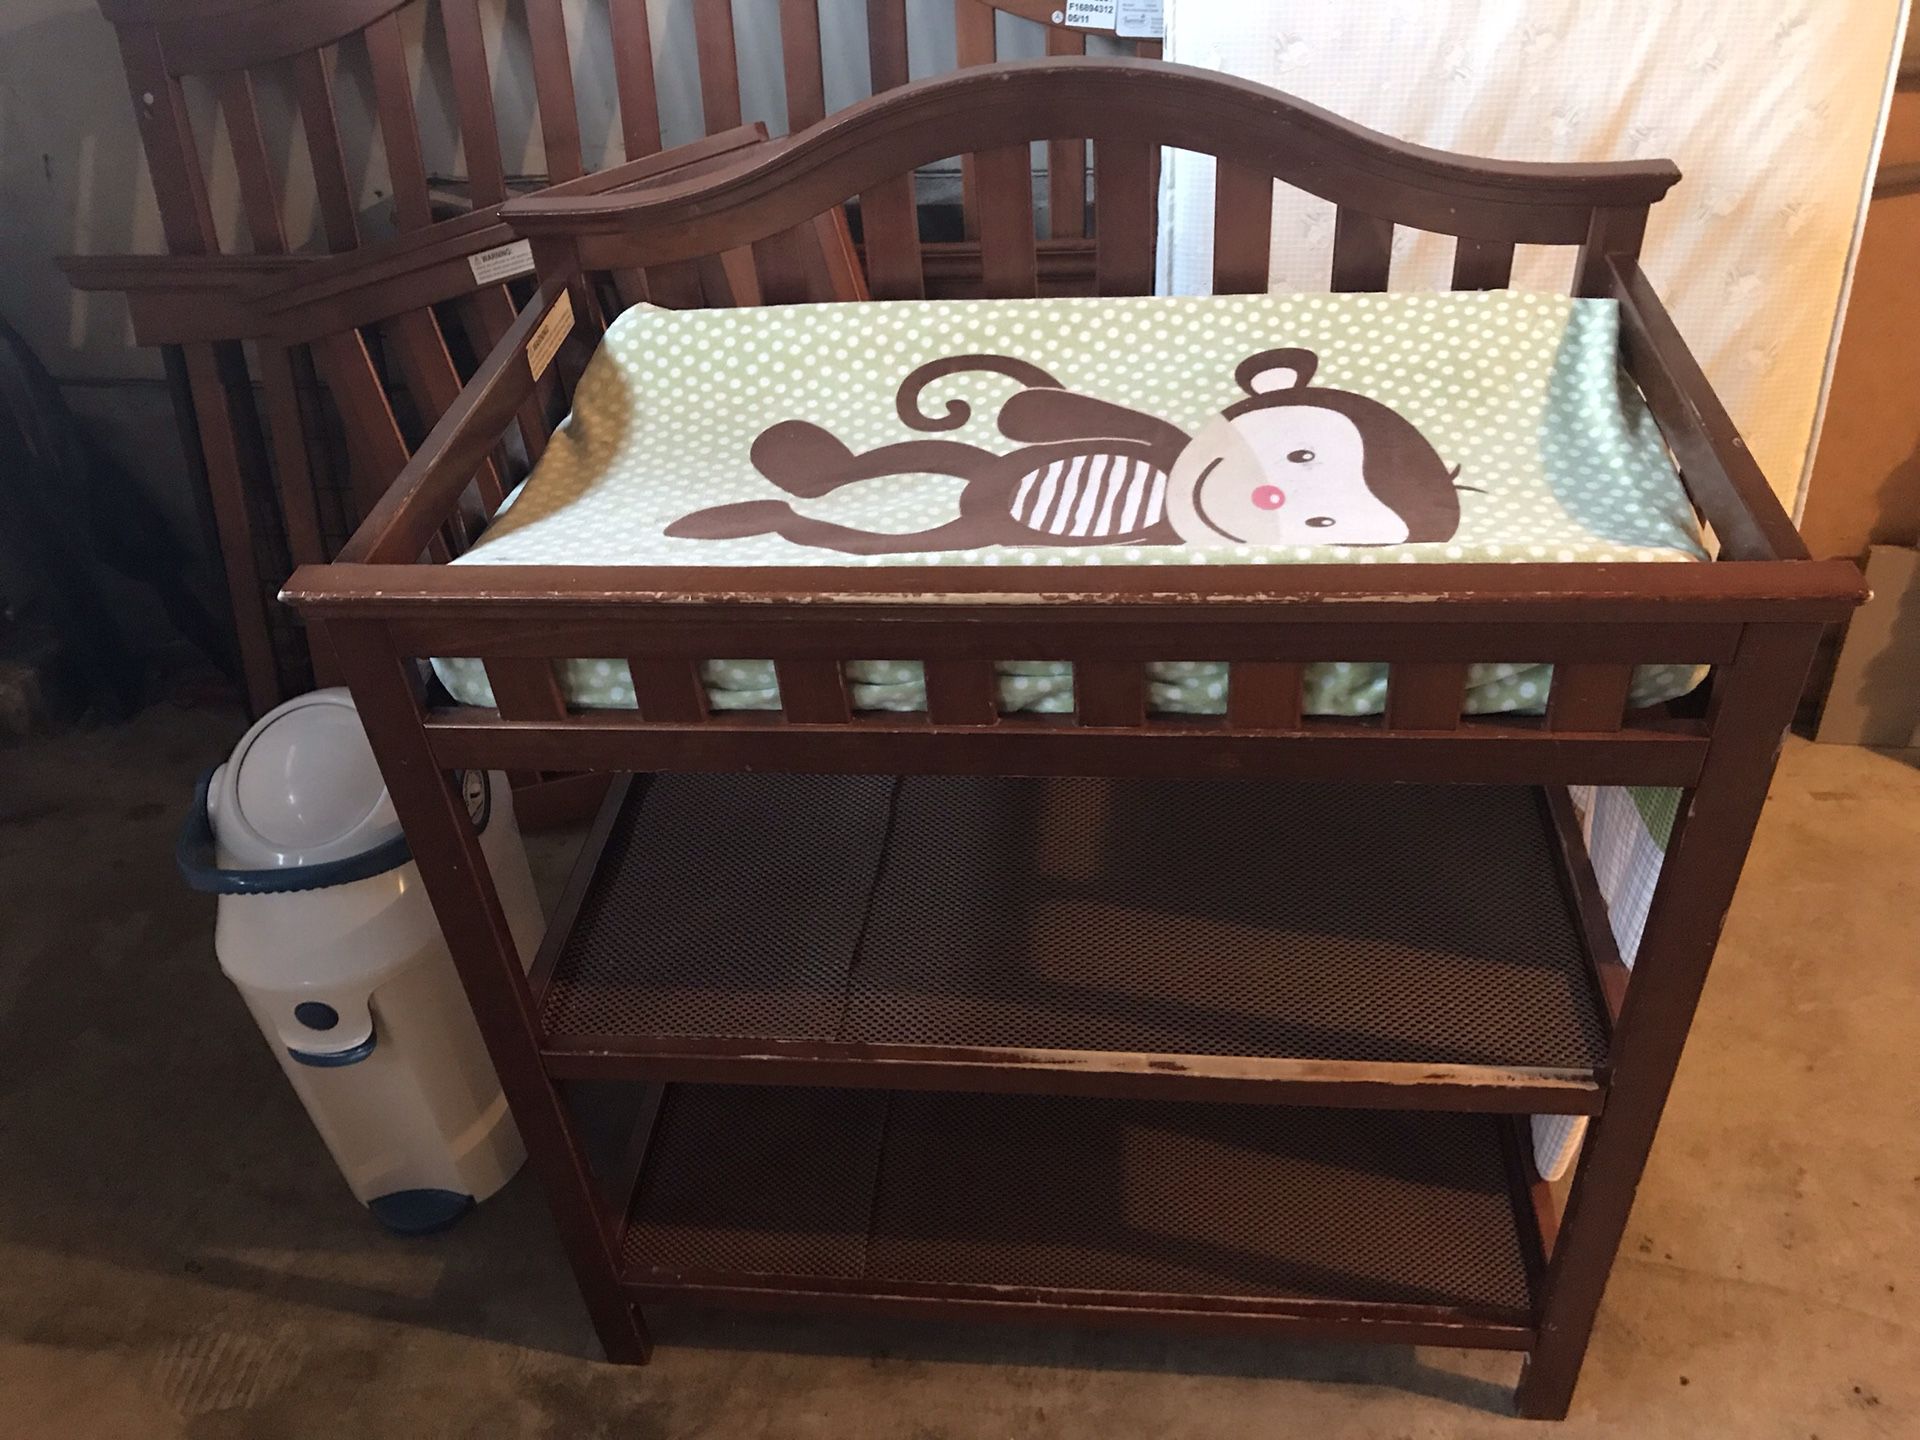 Nursery Items changing table, crib, diaper pail, etc